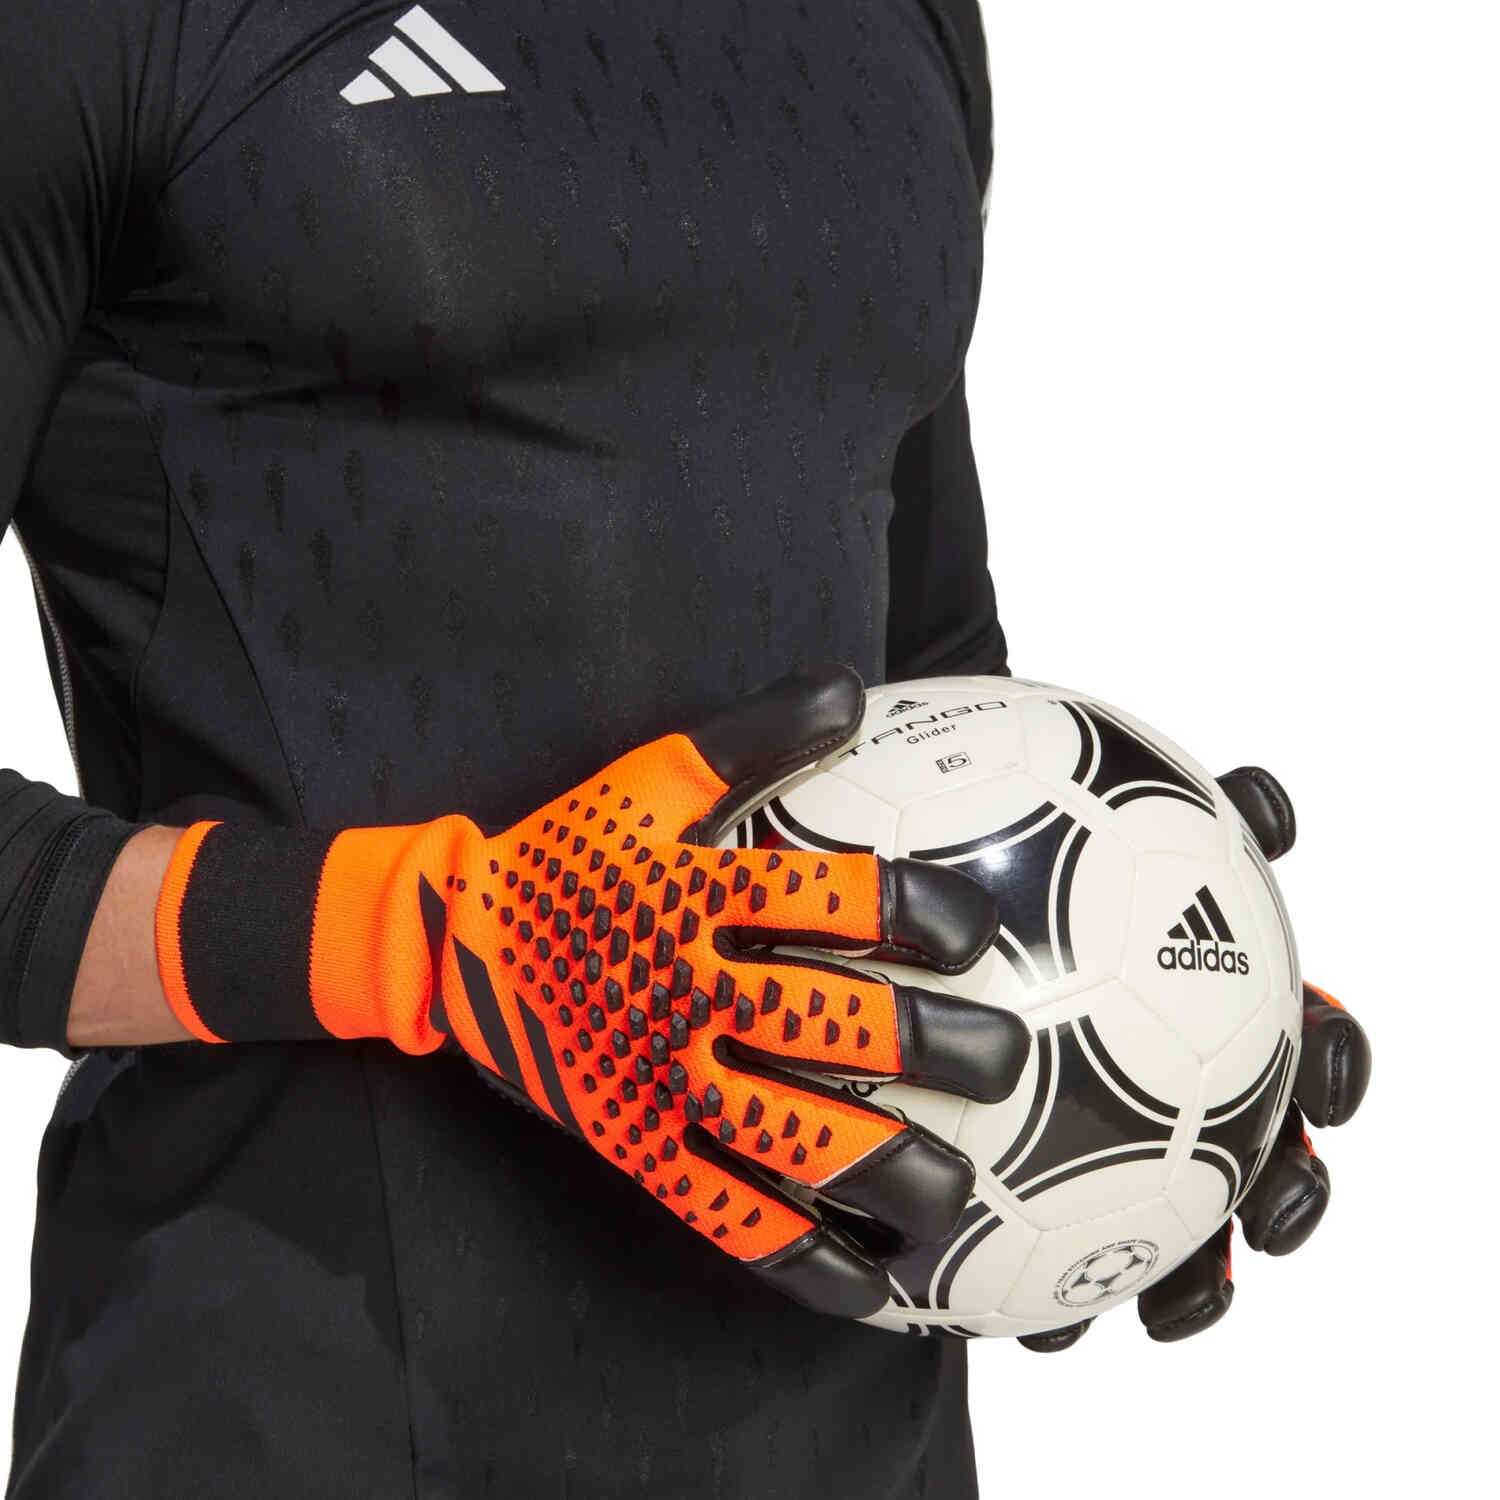 adidas Predator Pro Hybrid Goalkeeper Gloves – Heatspawn Pack